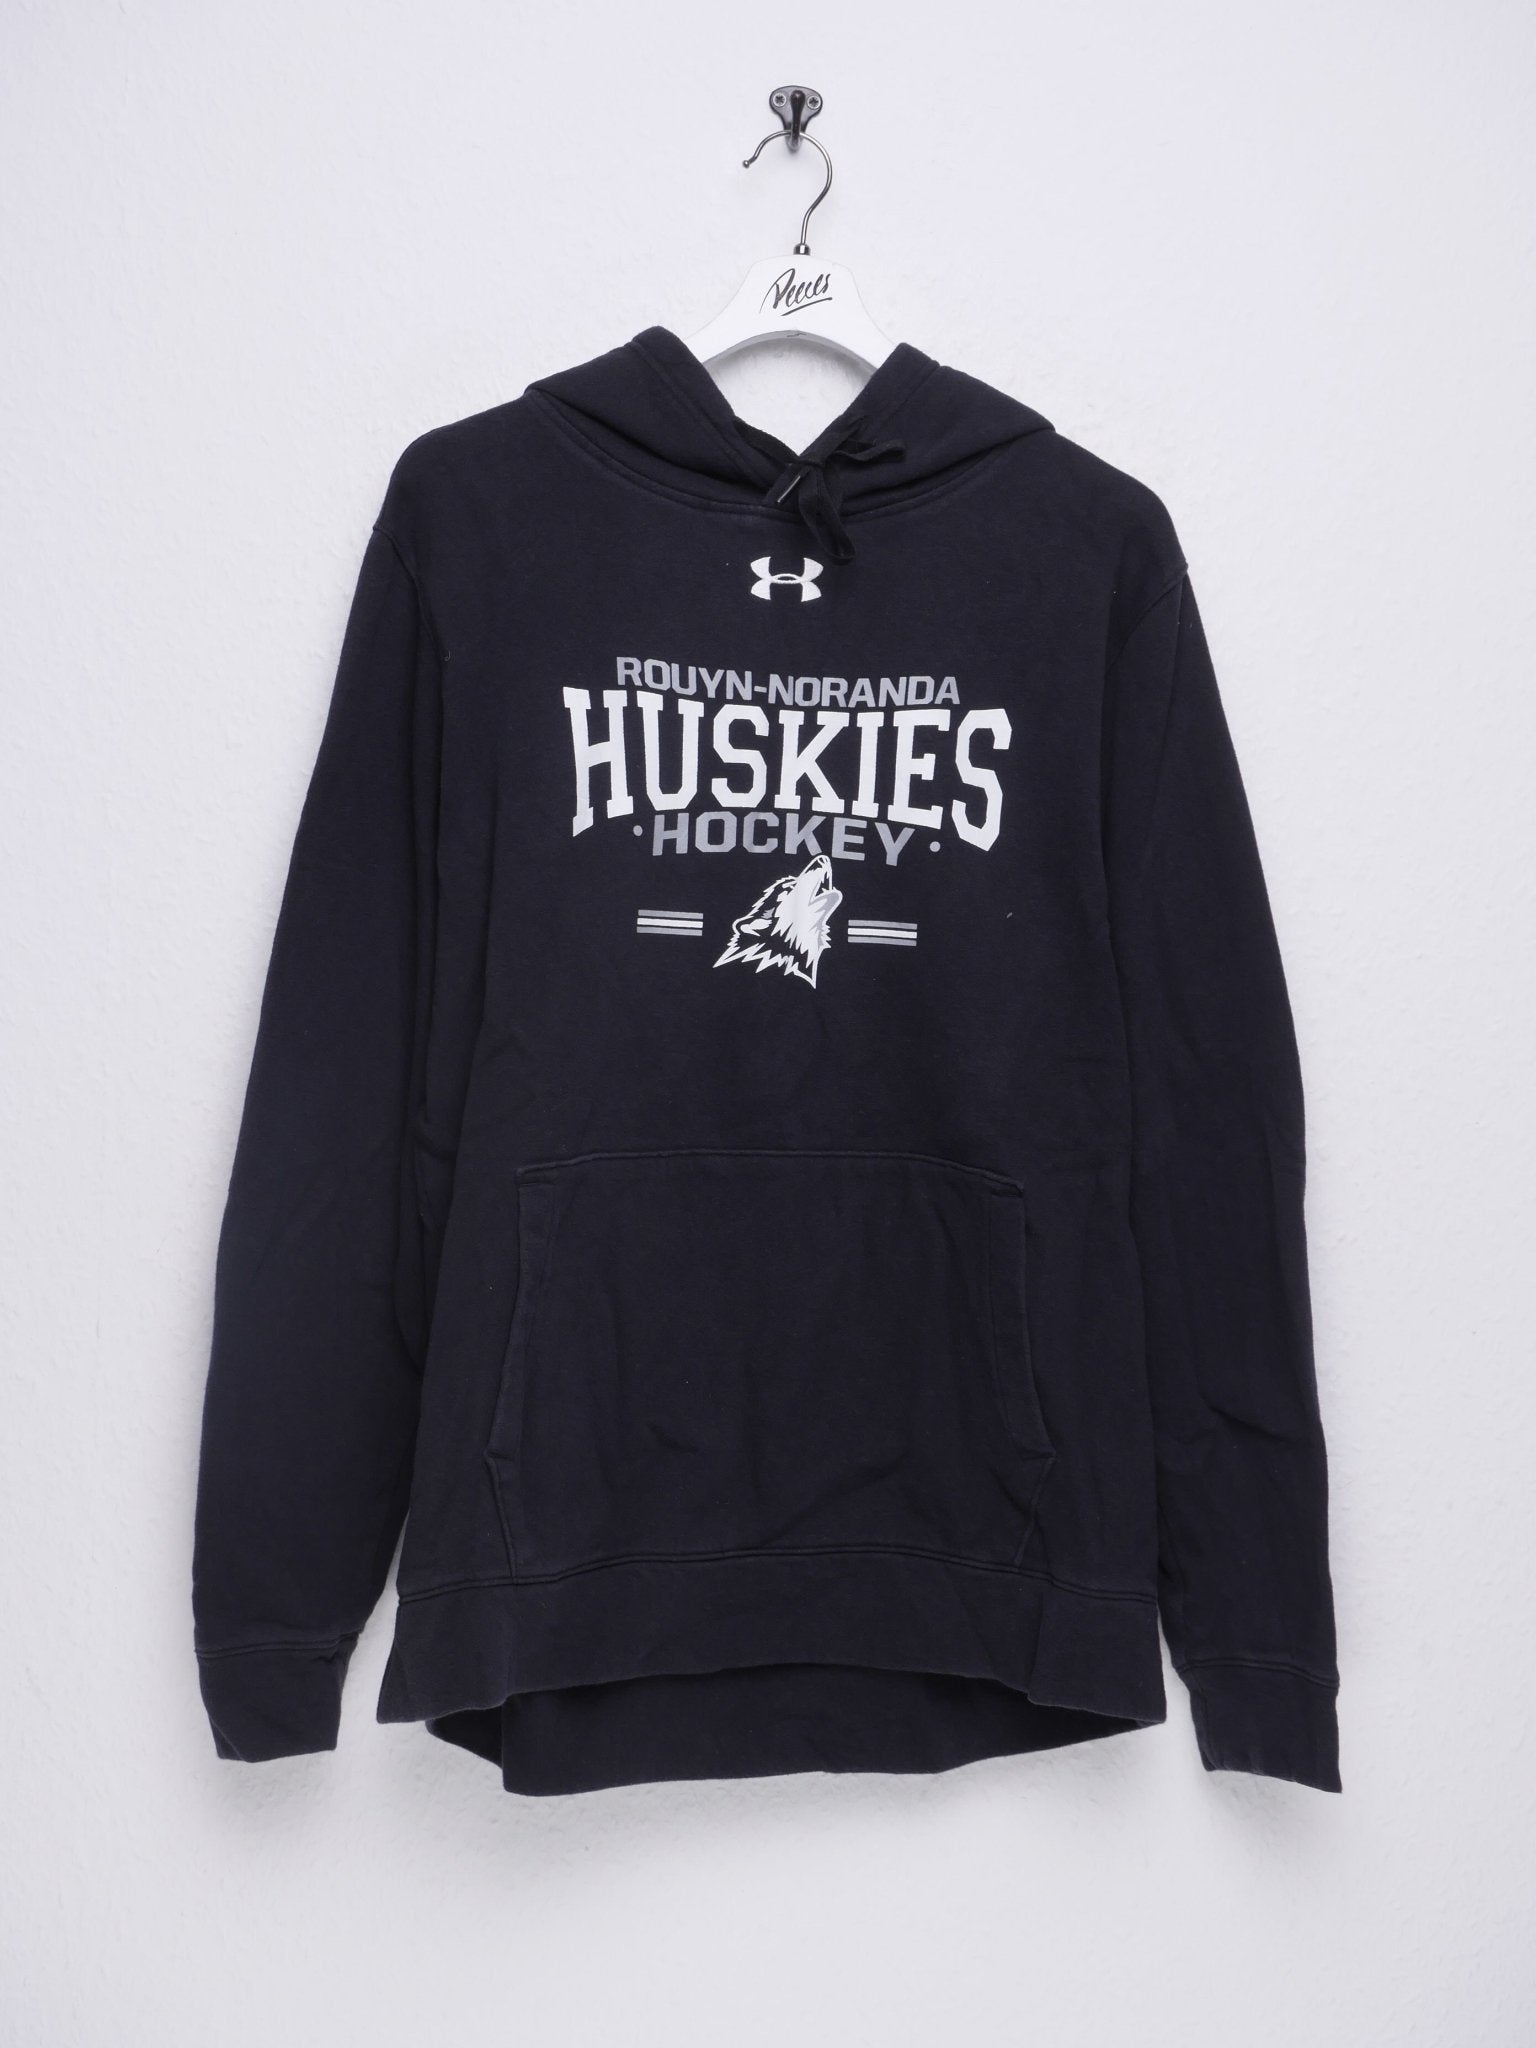 Under Amour Huskins Hockey embroidered Logo black Hoodie - Peeces